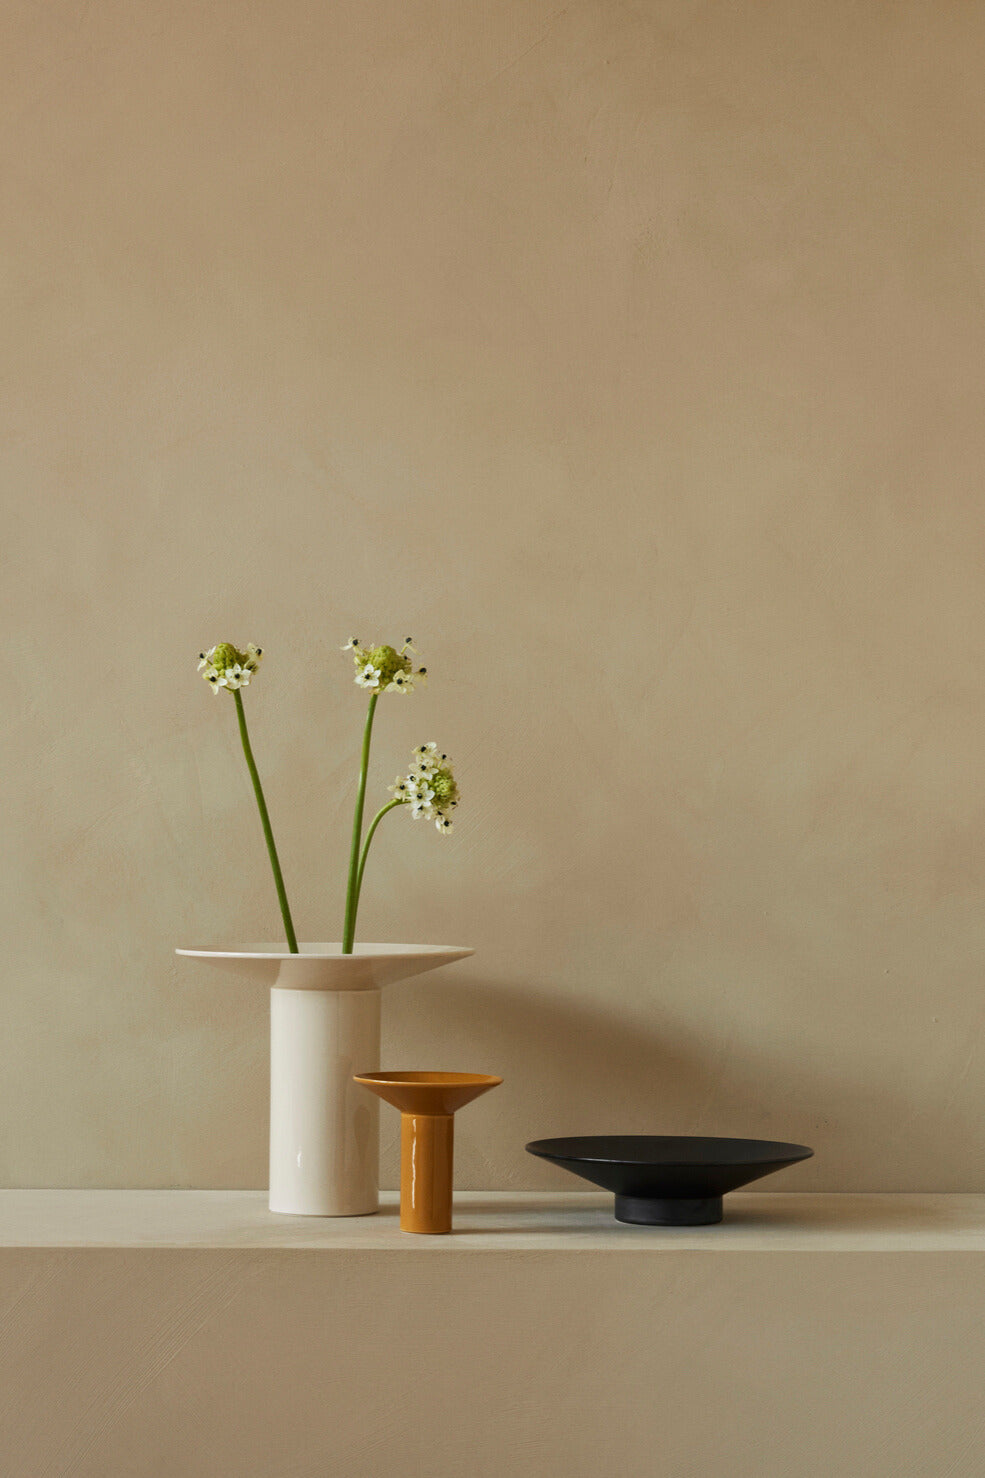 Audo Copenhagen (Menu) Hana Vases in three colors with flower arrangement against wall